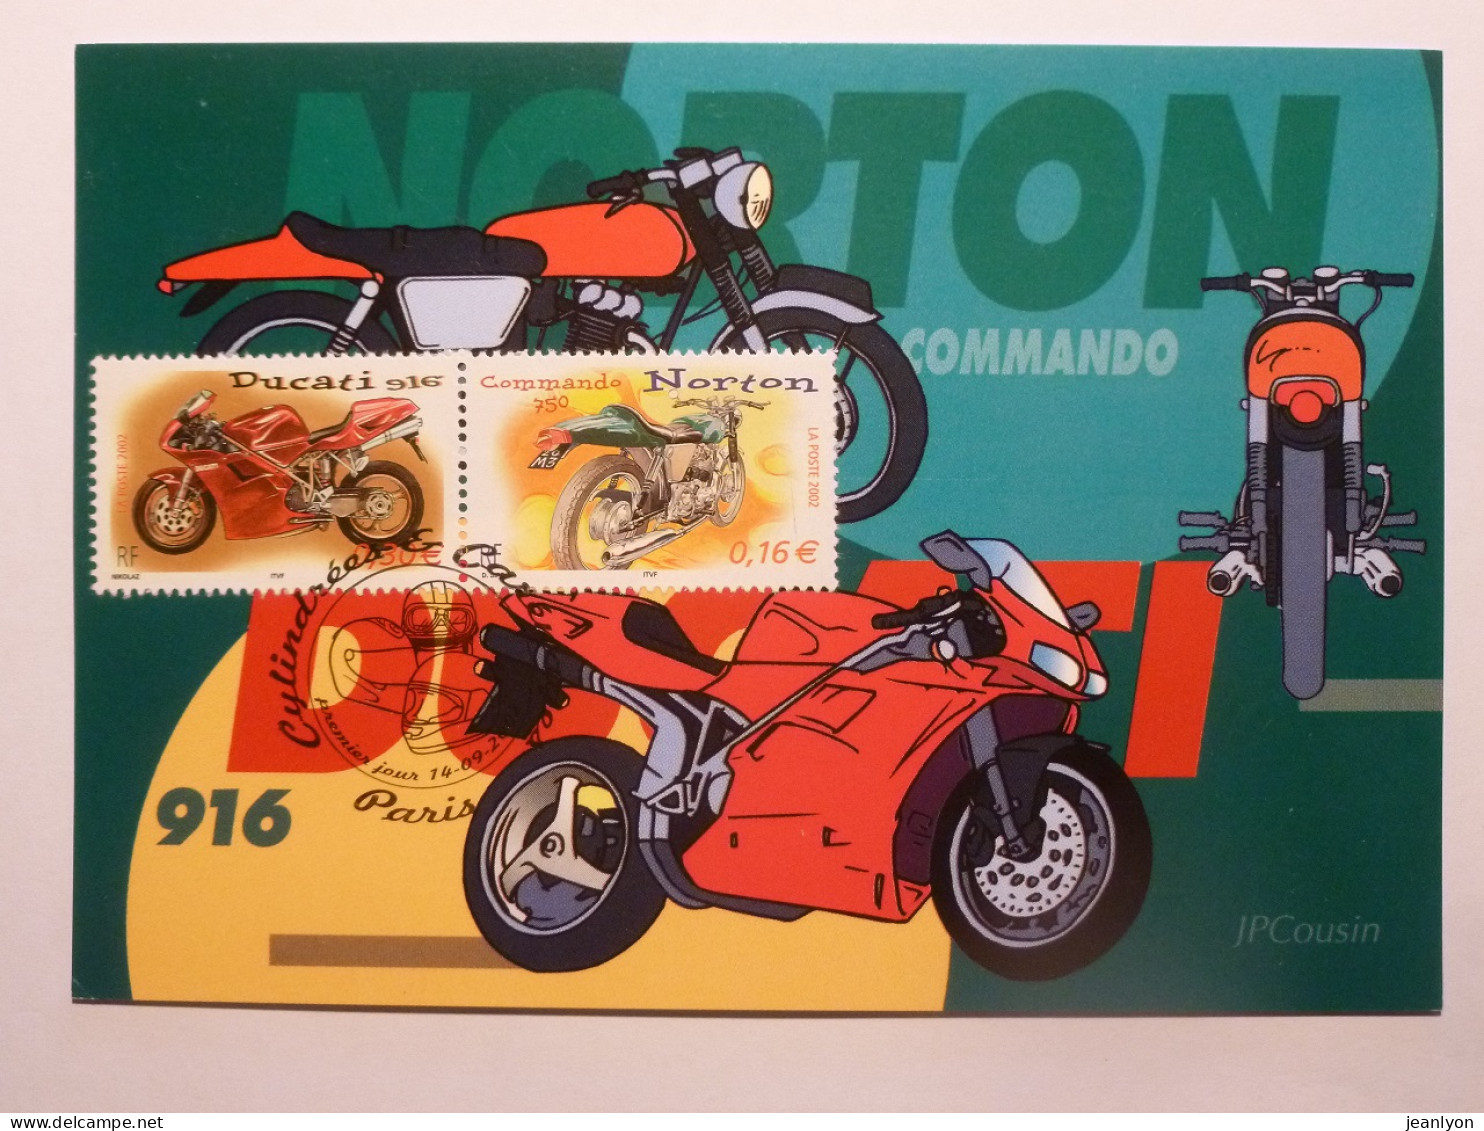 MOTOS - DUCATI 916 - NORTON COMMANDO 750 - Carte Philatélique 1er Jour Timbre Moto - Motorbikes